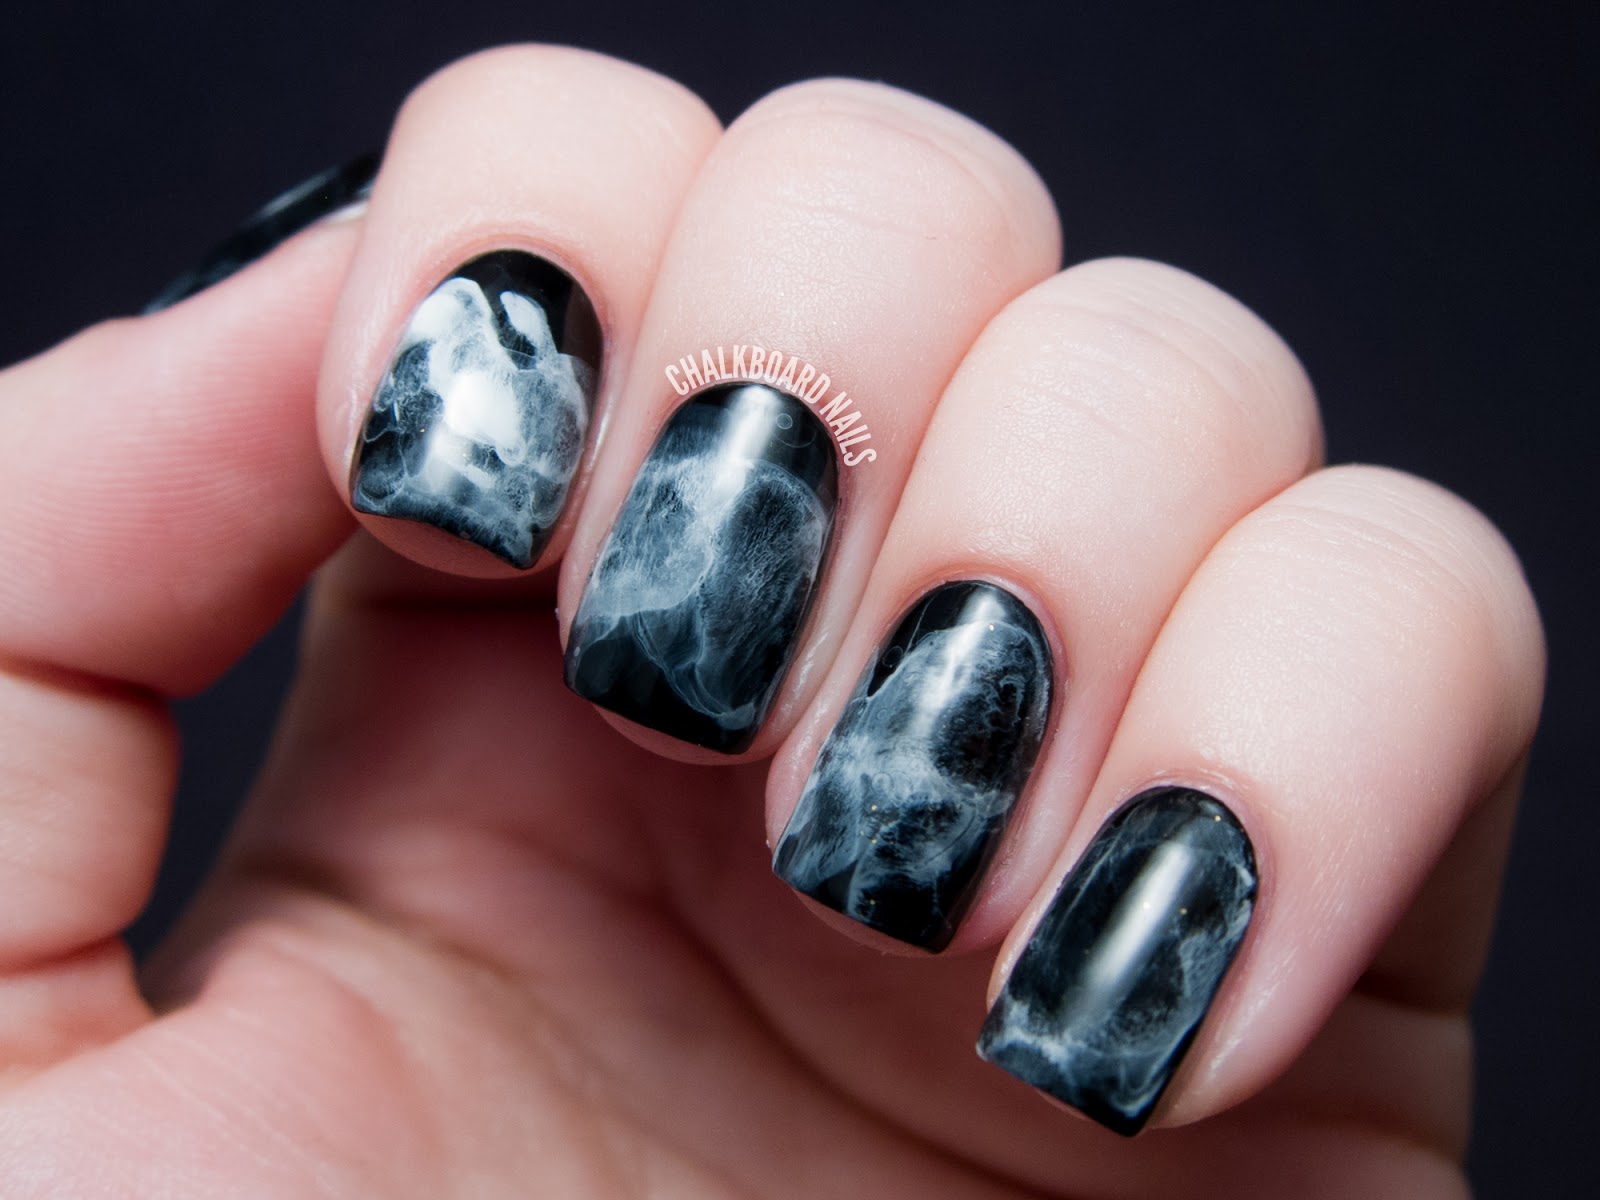 3. Minimalist Black and White Nails - wide 10